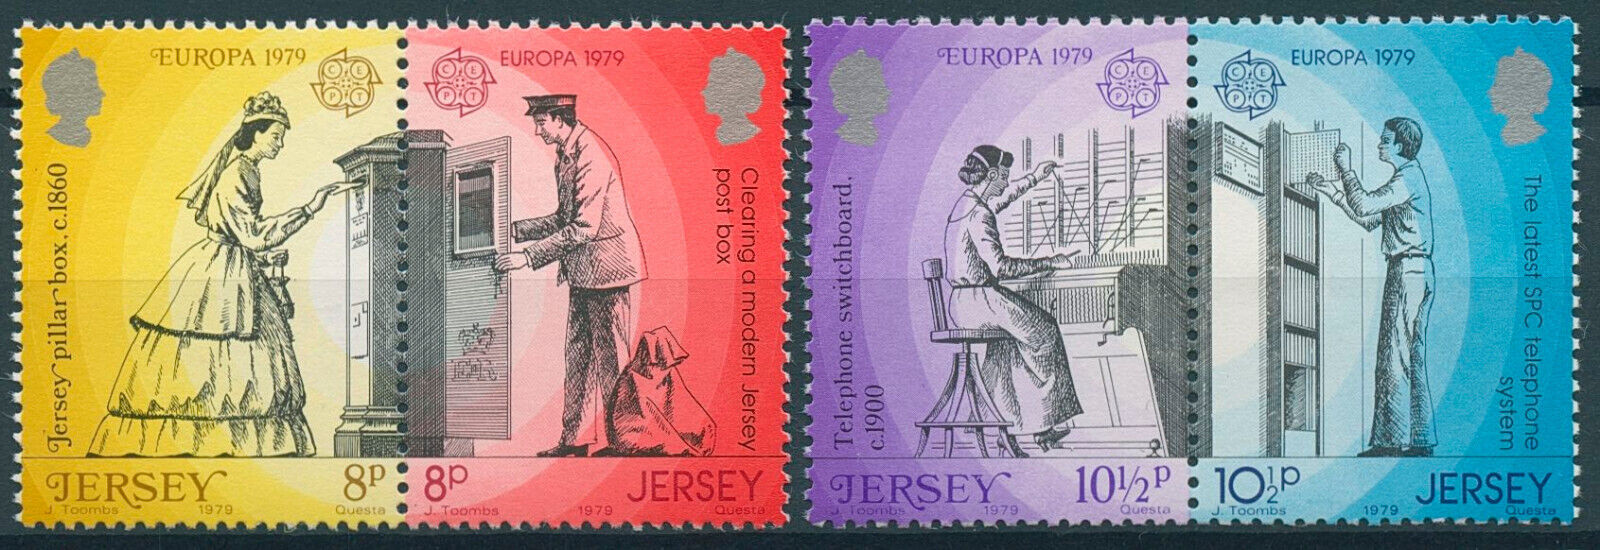 Jersey 1979 MNH Europa Stamps Communications Post Pillar Boxes Telephones 4v Set